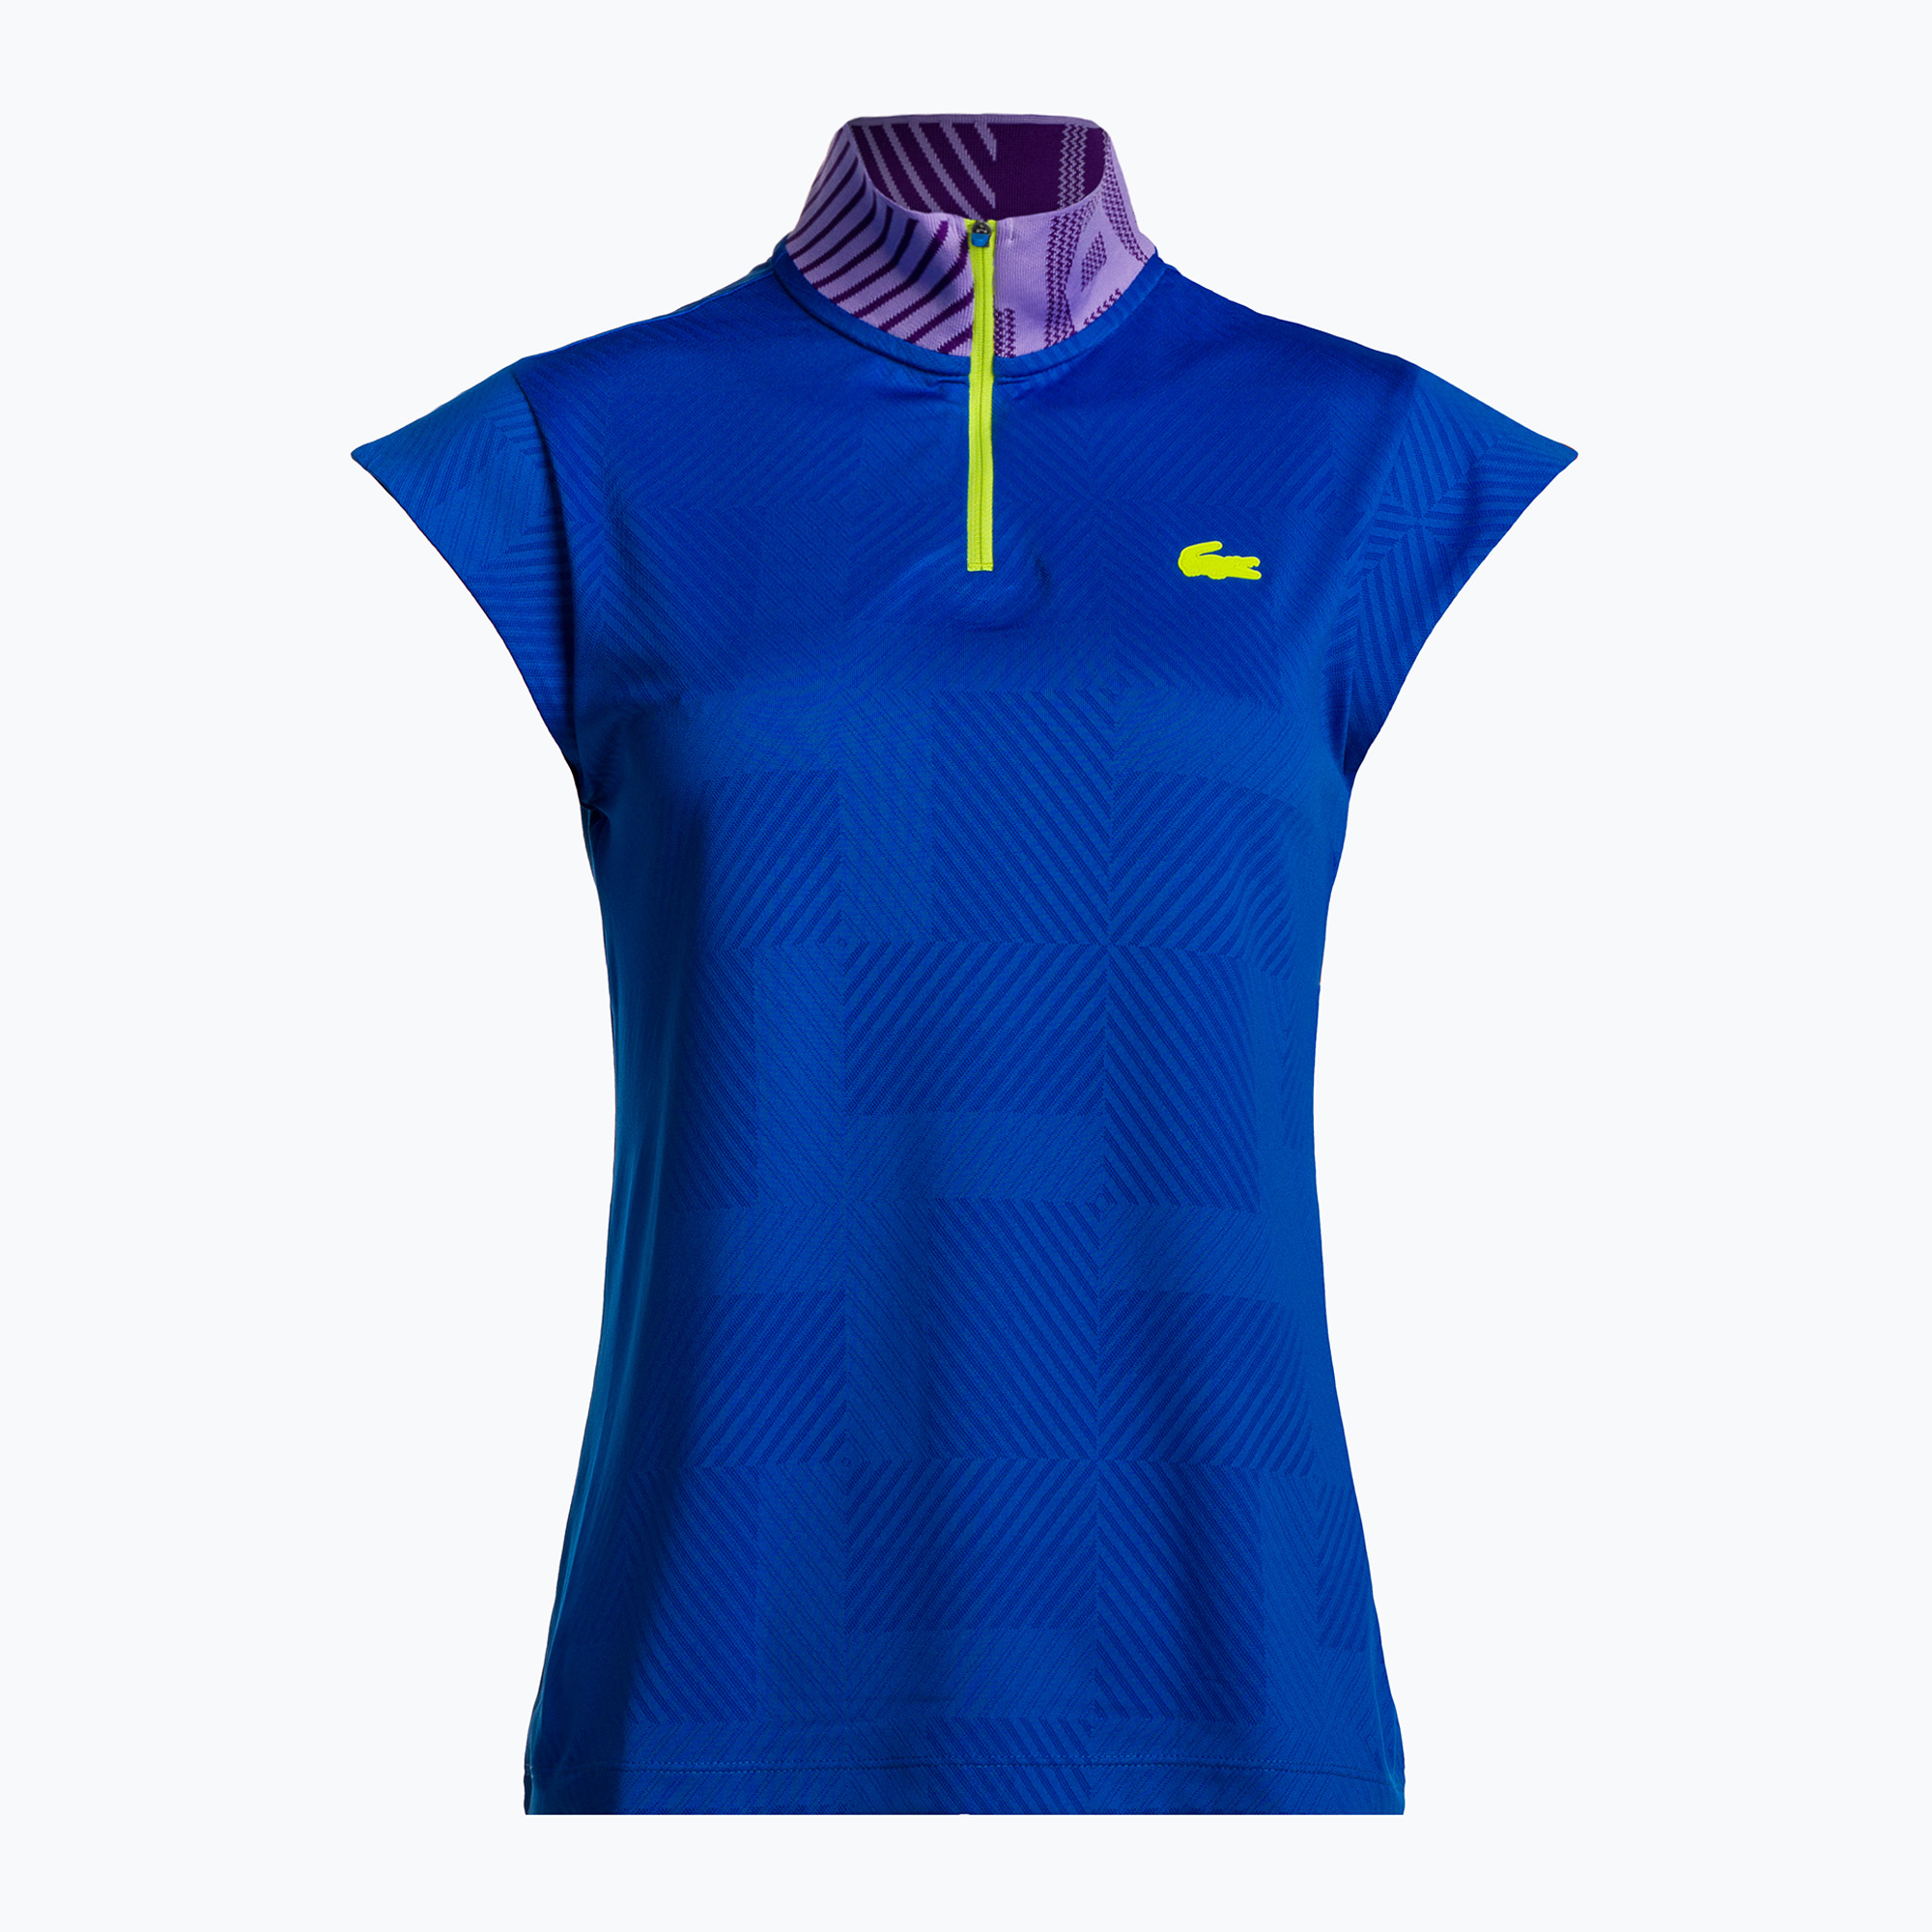 Дамска тенис поло риза Lacoste, синя PF9310